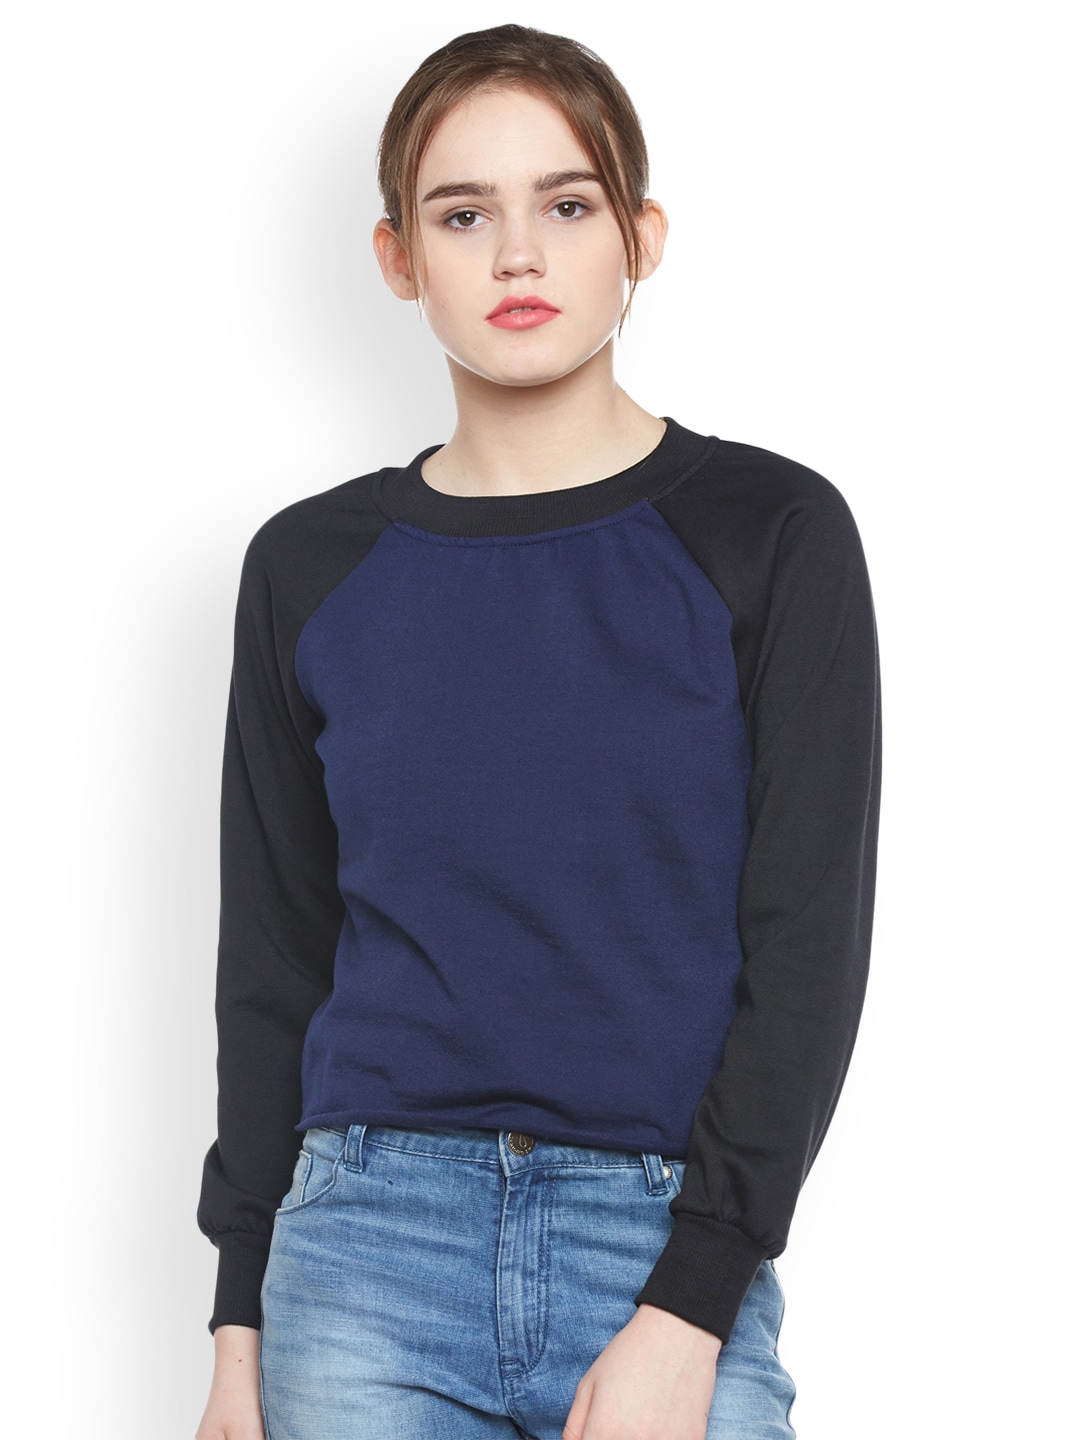 Belle Fille Women Navy Blue & Black Solid Sweatshirt Price in India